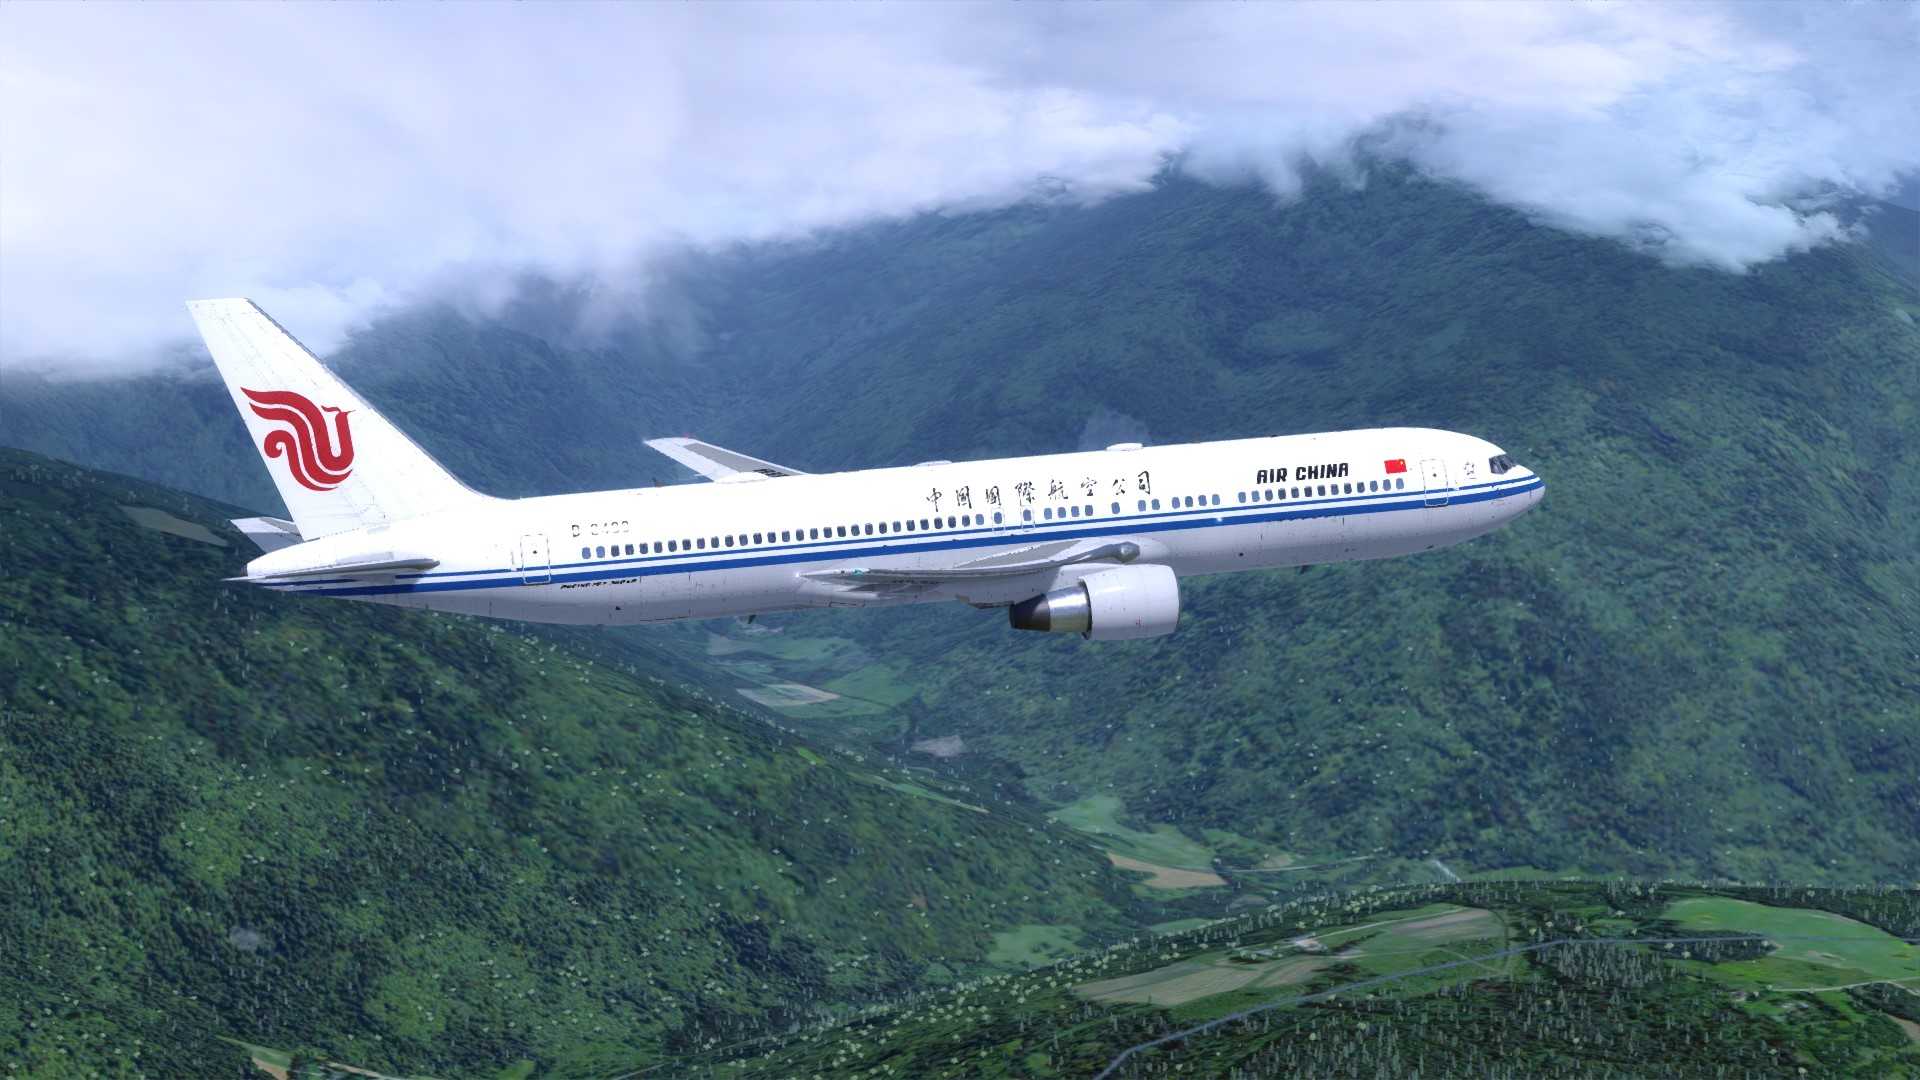 AIR CHINA 767 VNKT-9183 